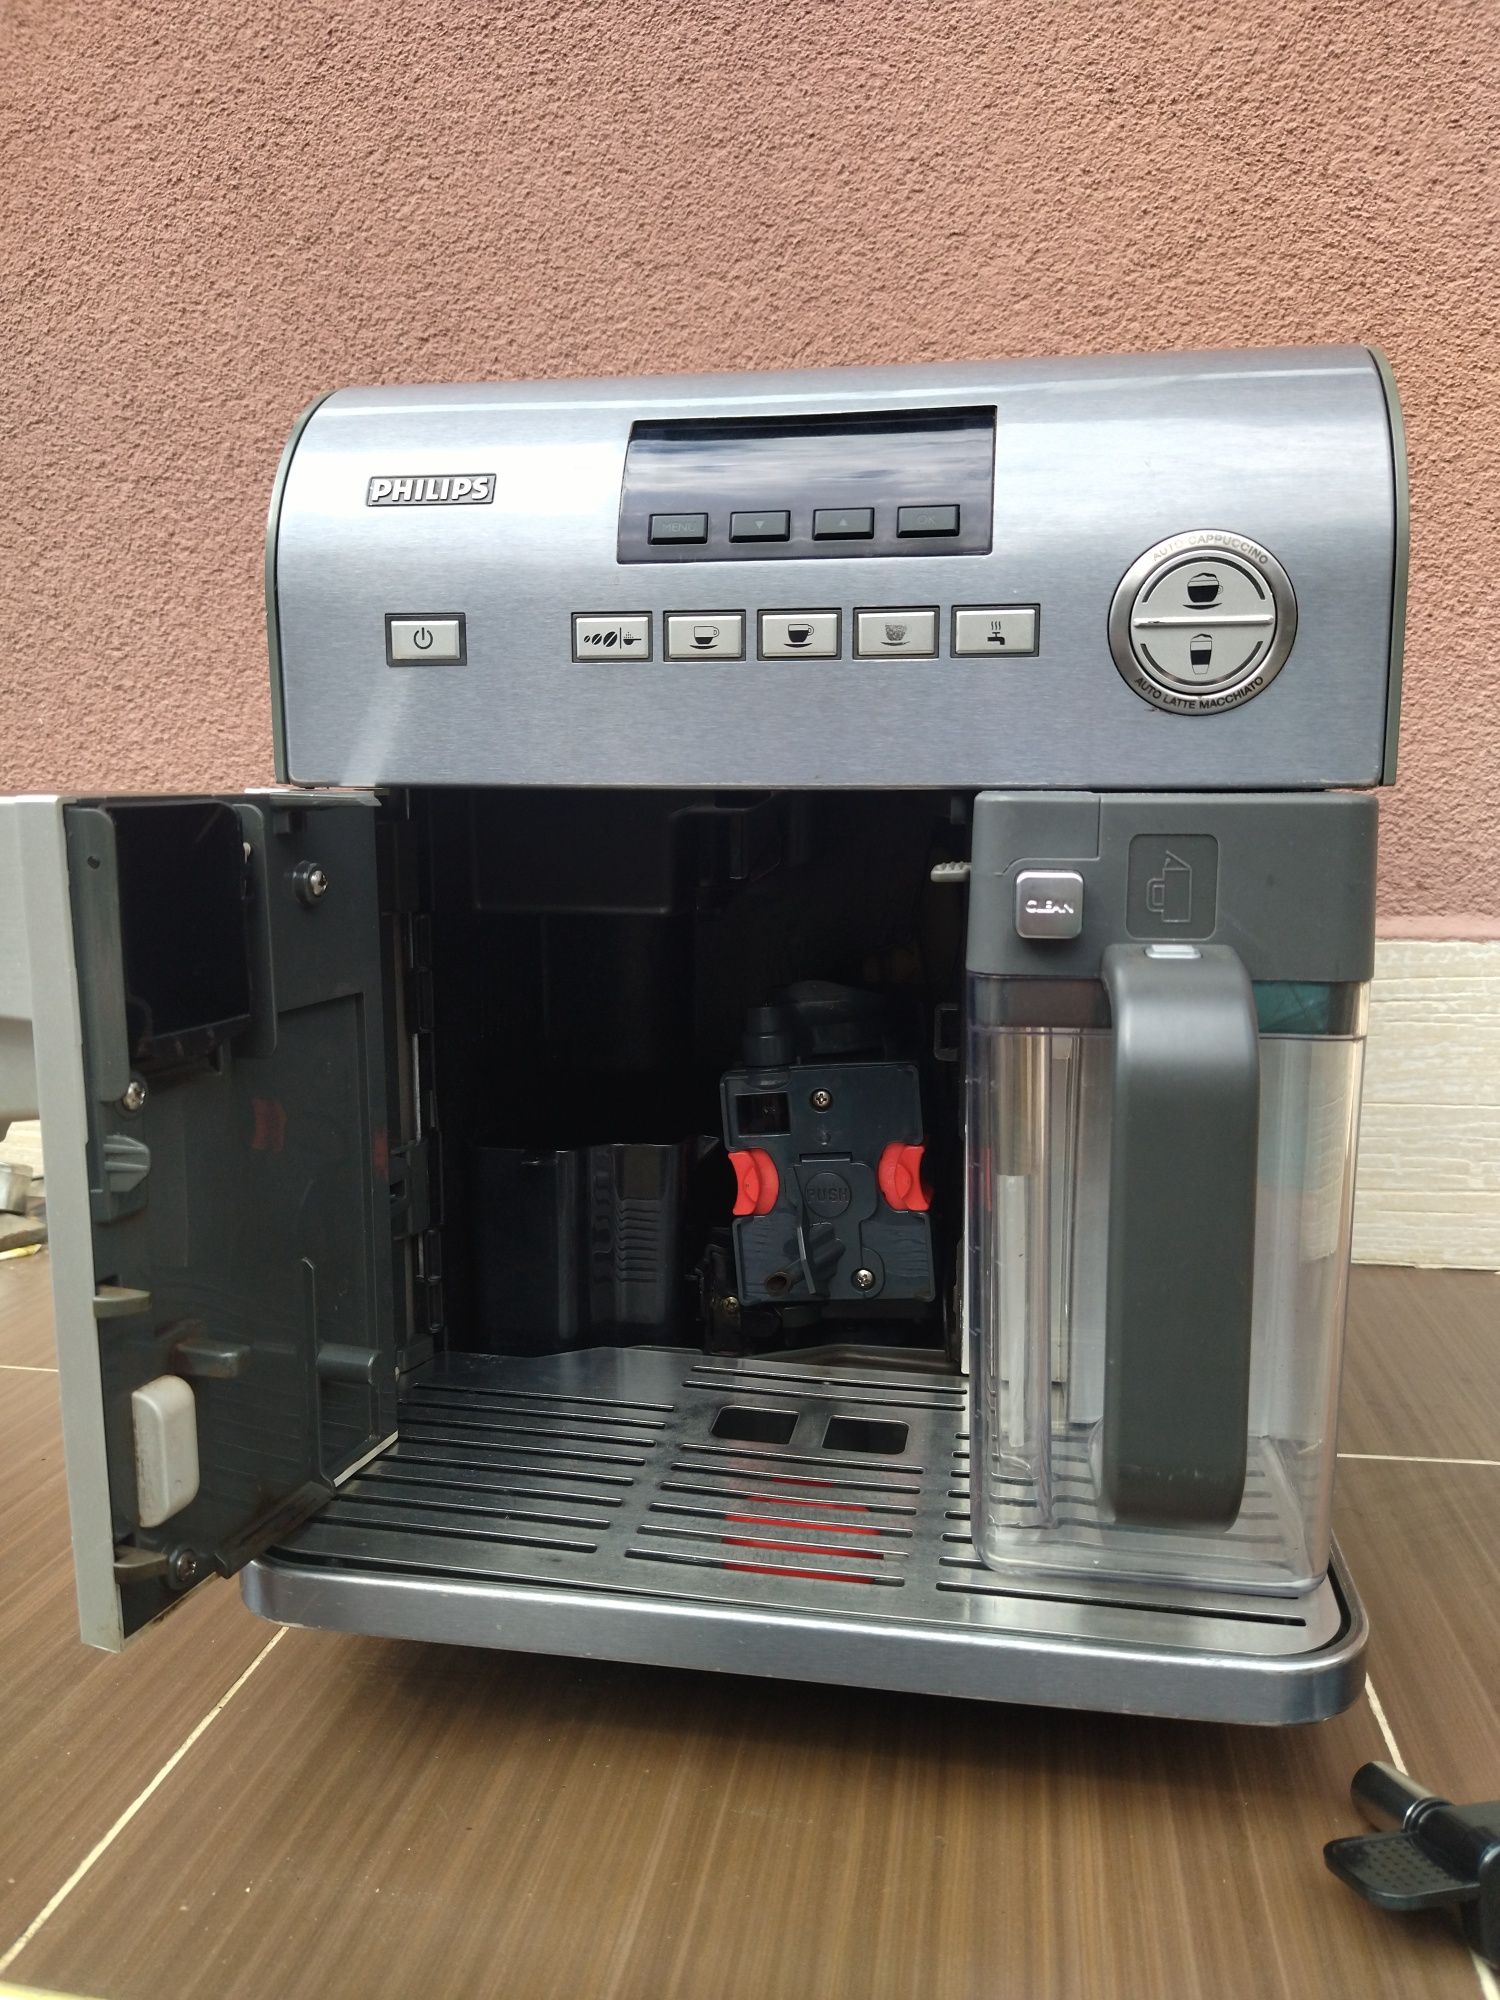 Кафе автомат Филипс